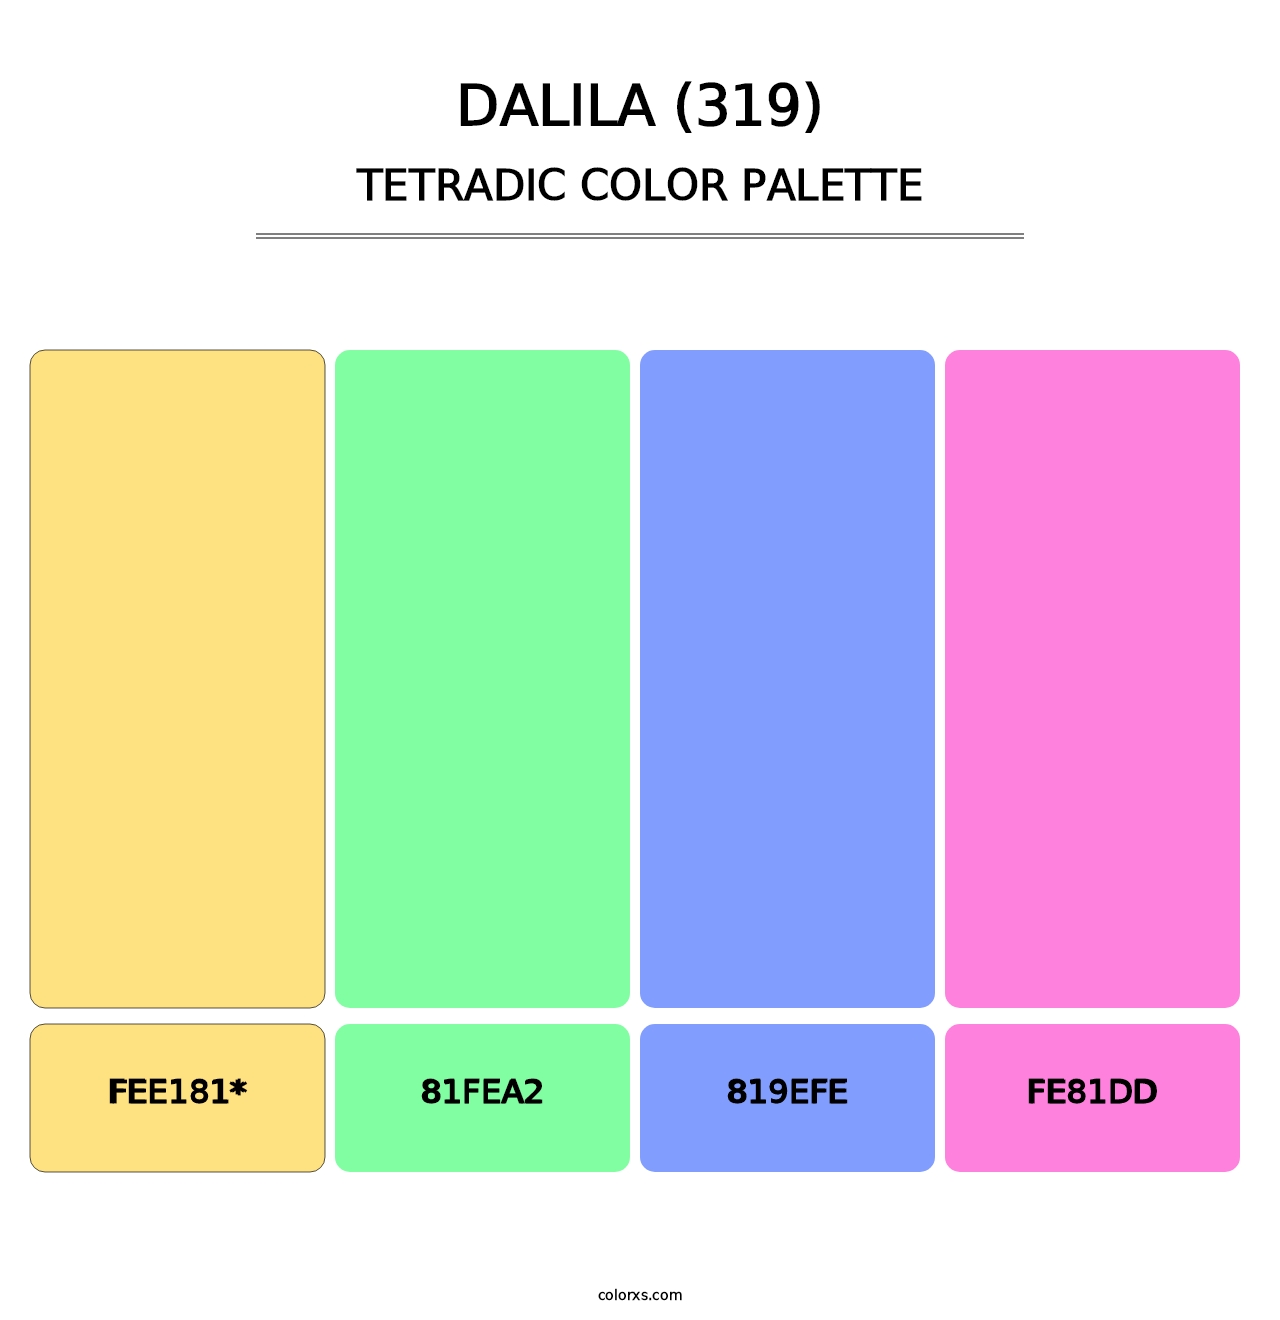 Dalila (319) - Tetradic Color Palette